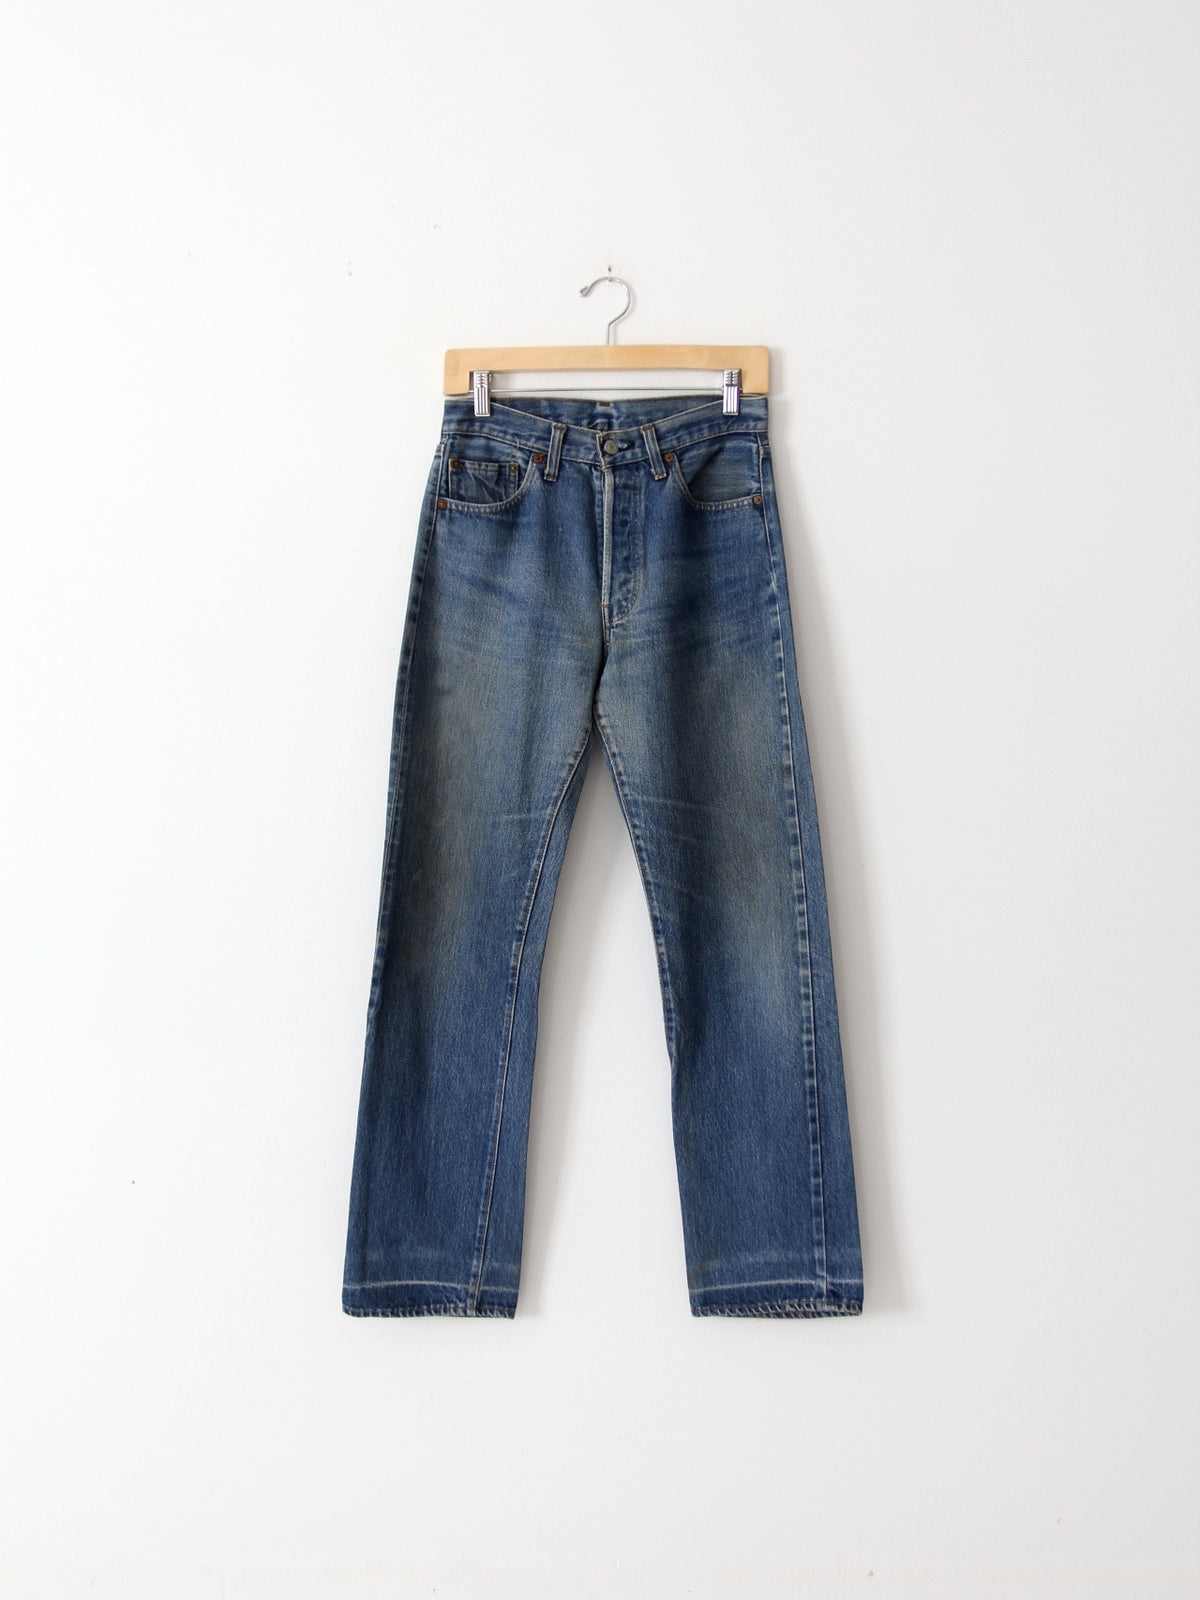 vintage Levi's 501 red line selvedge jeans, 29 x 31